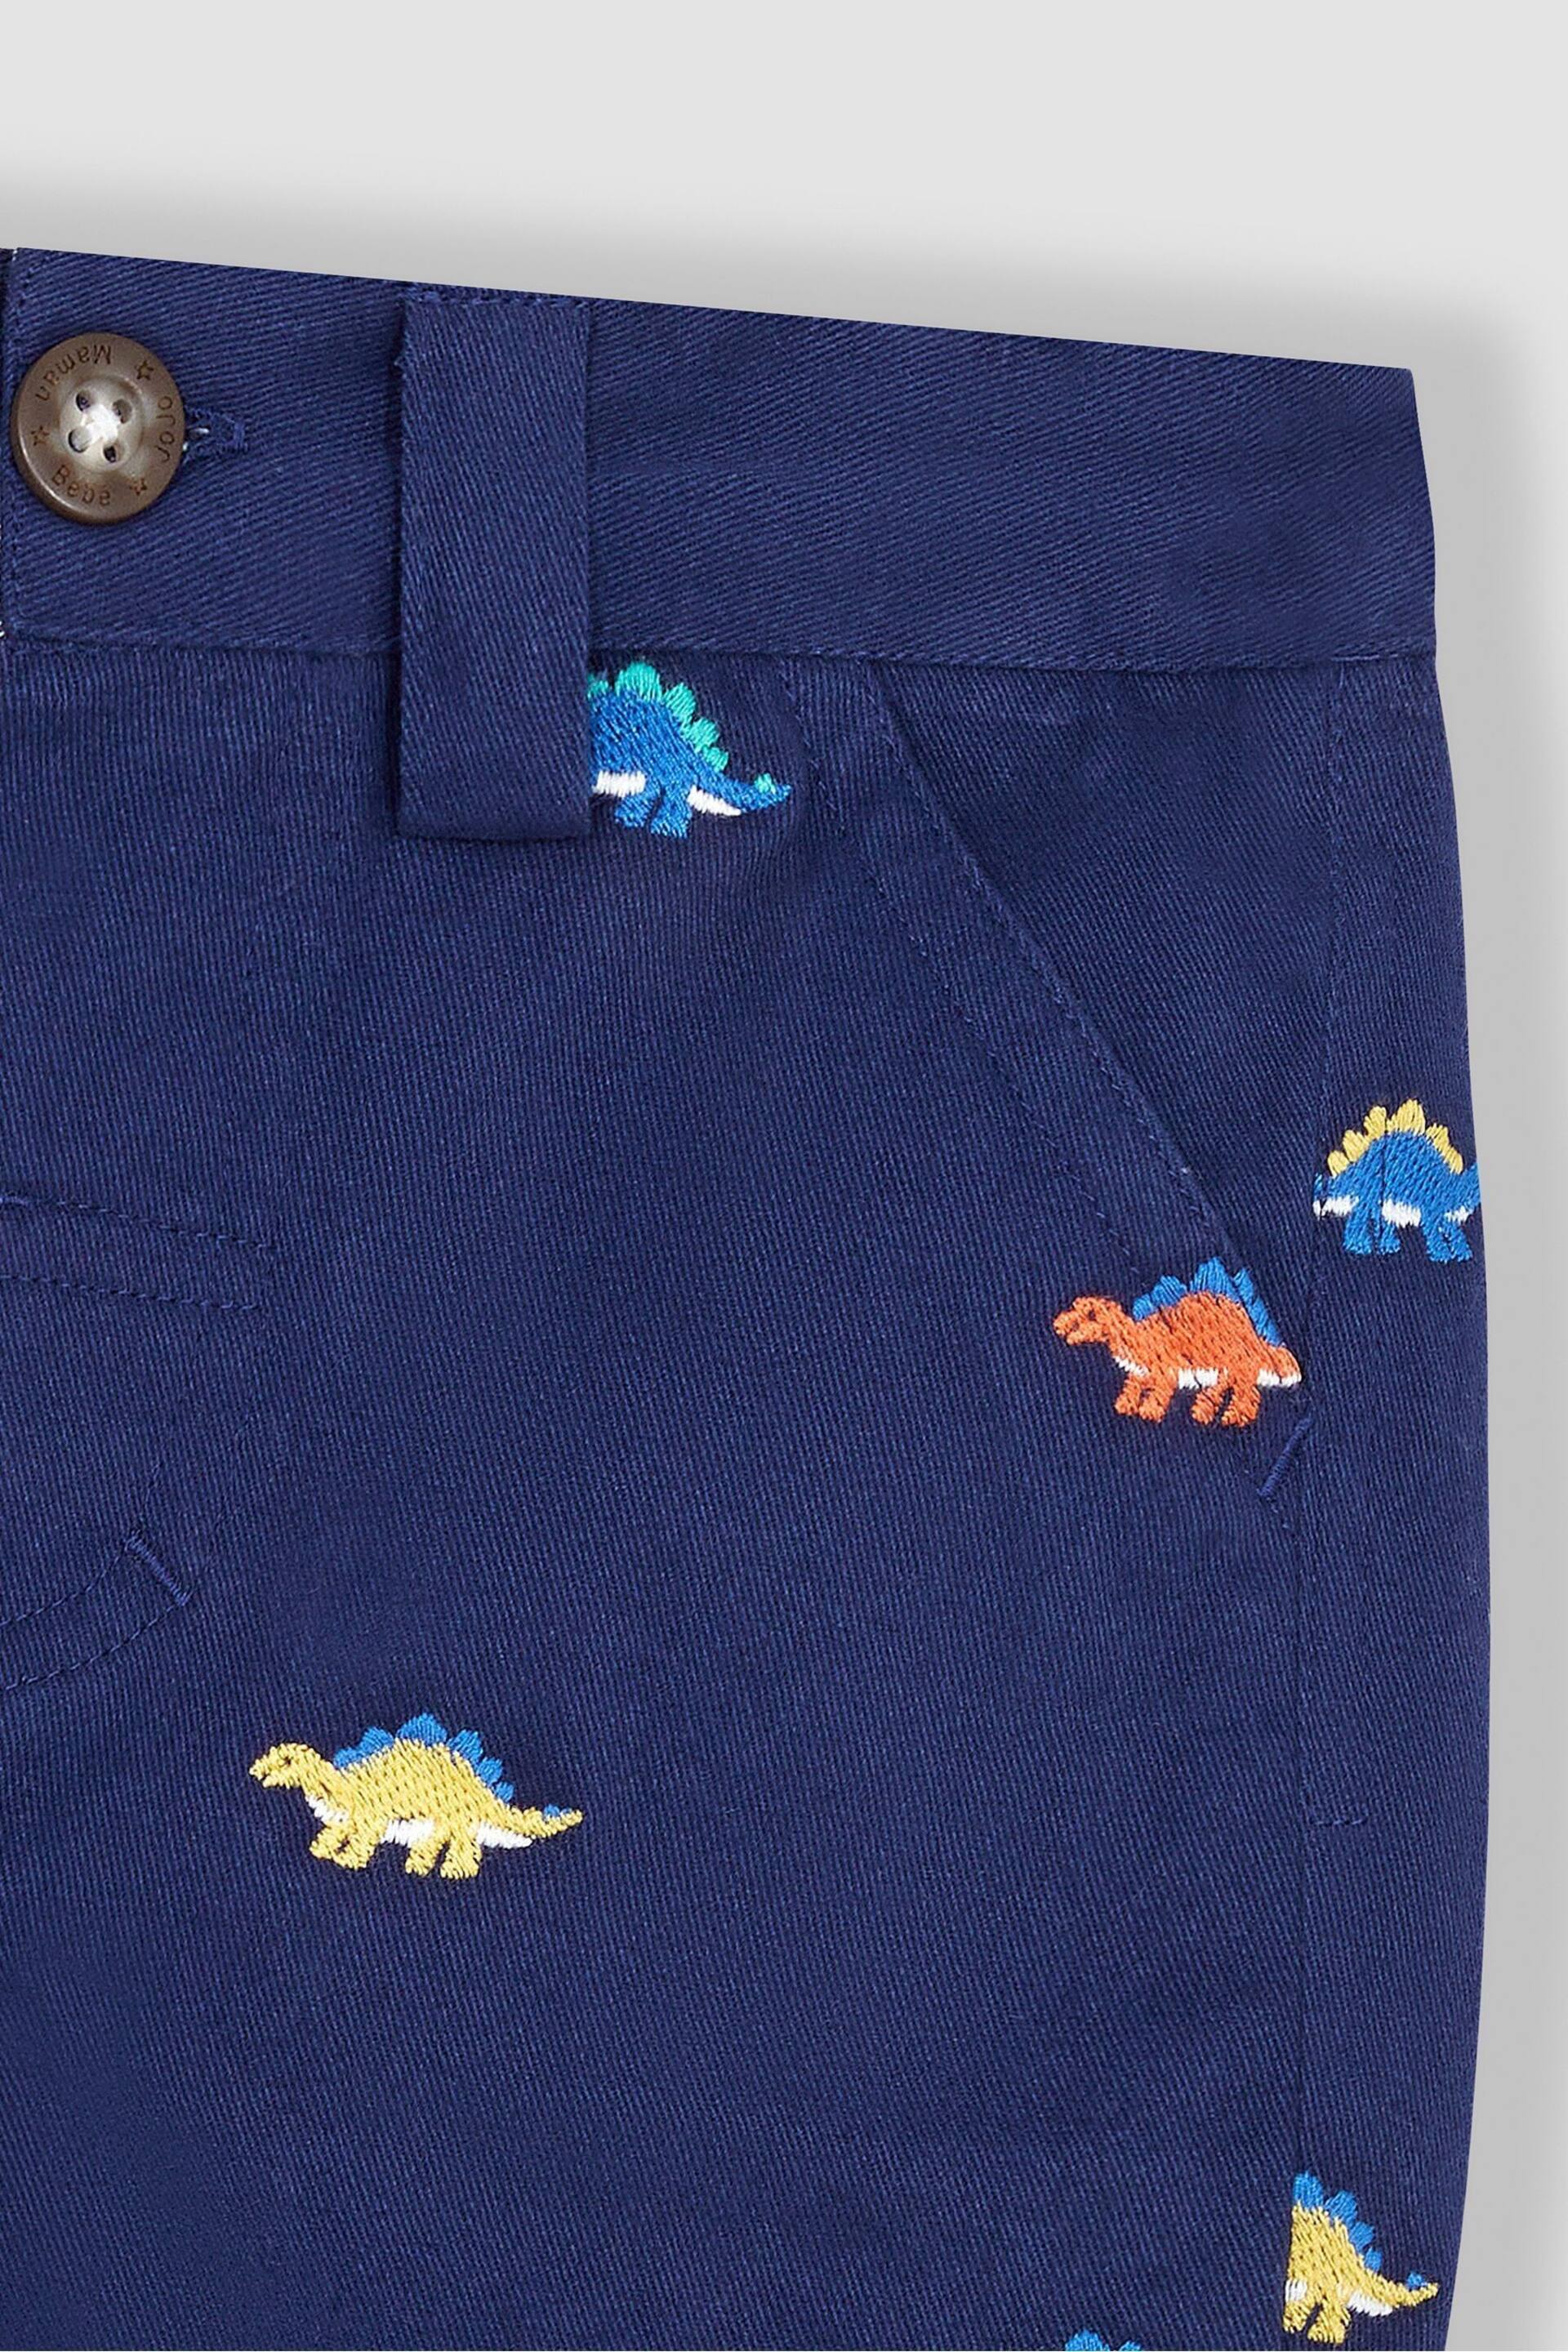 JoJo Maman Bébé Navy Blue Stegosaurus Embroidered Twill Shorts - Image 2 of 3